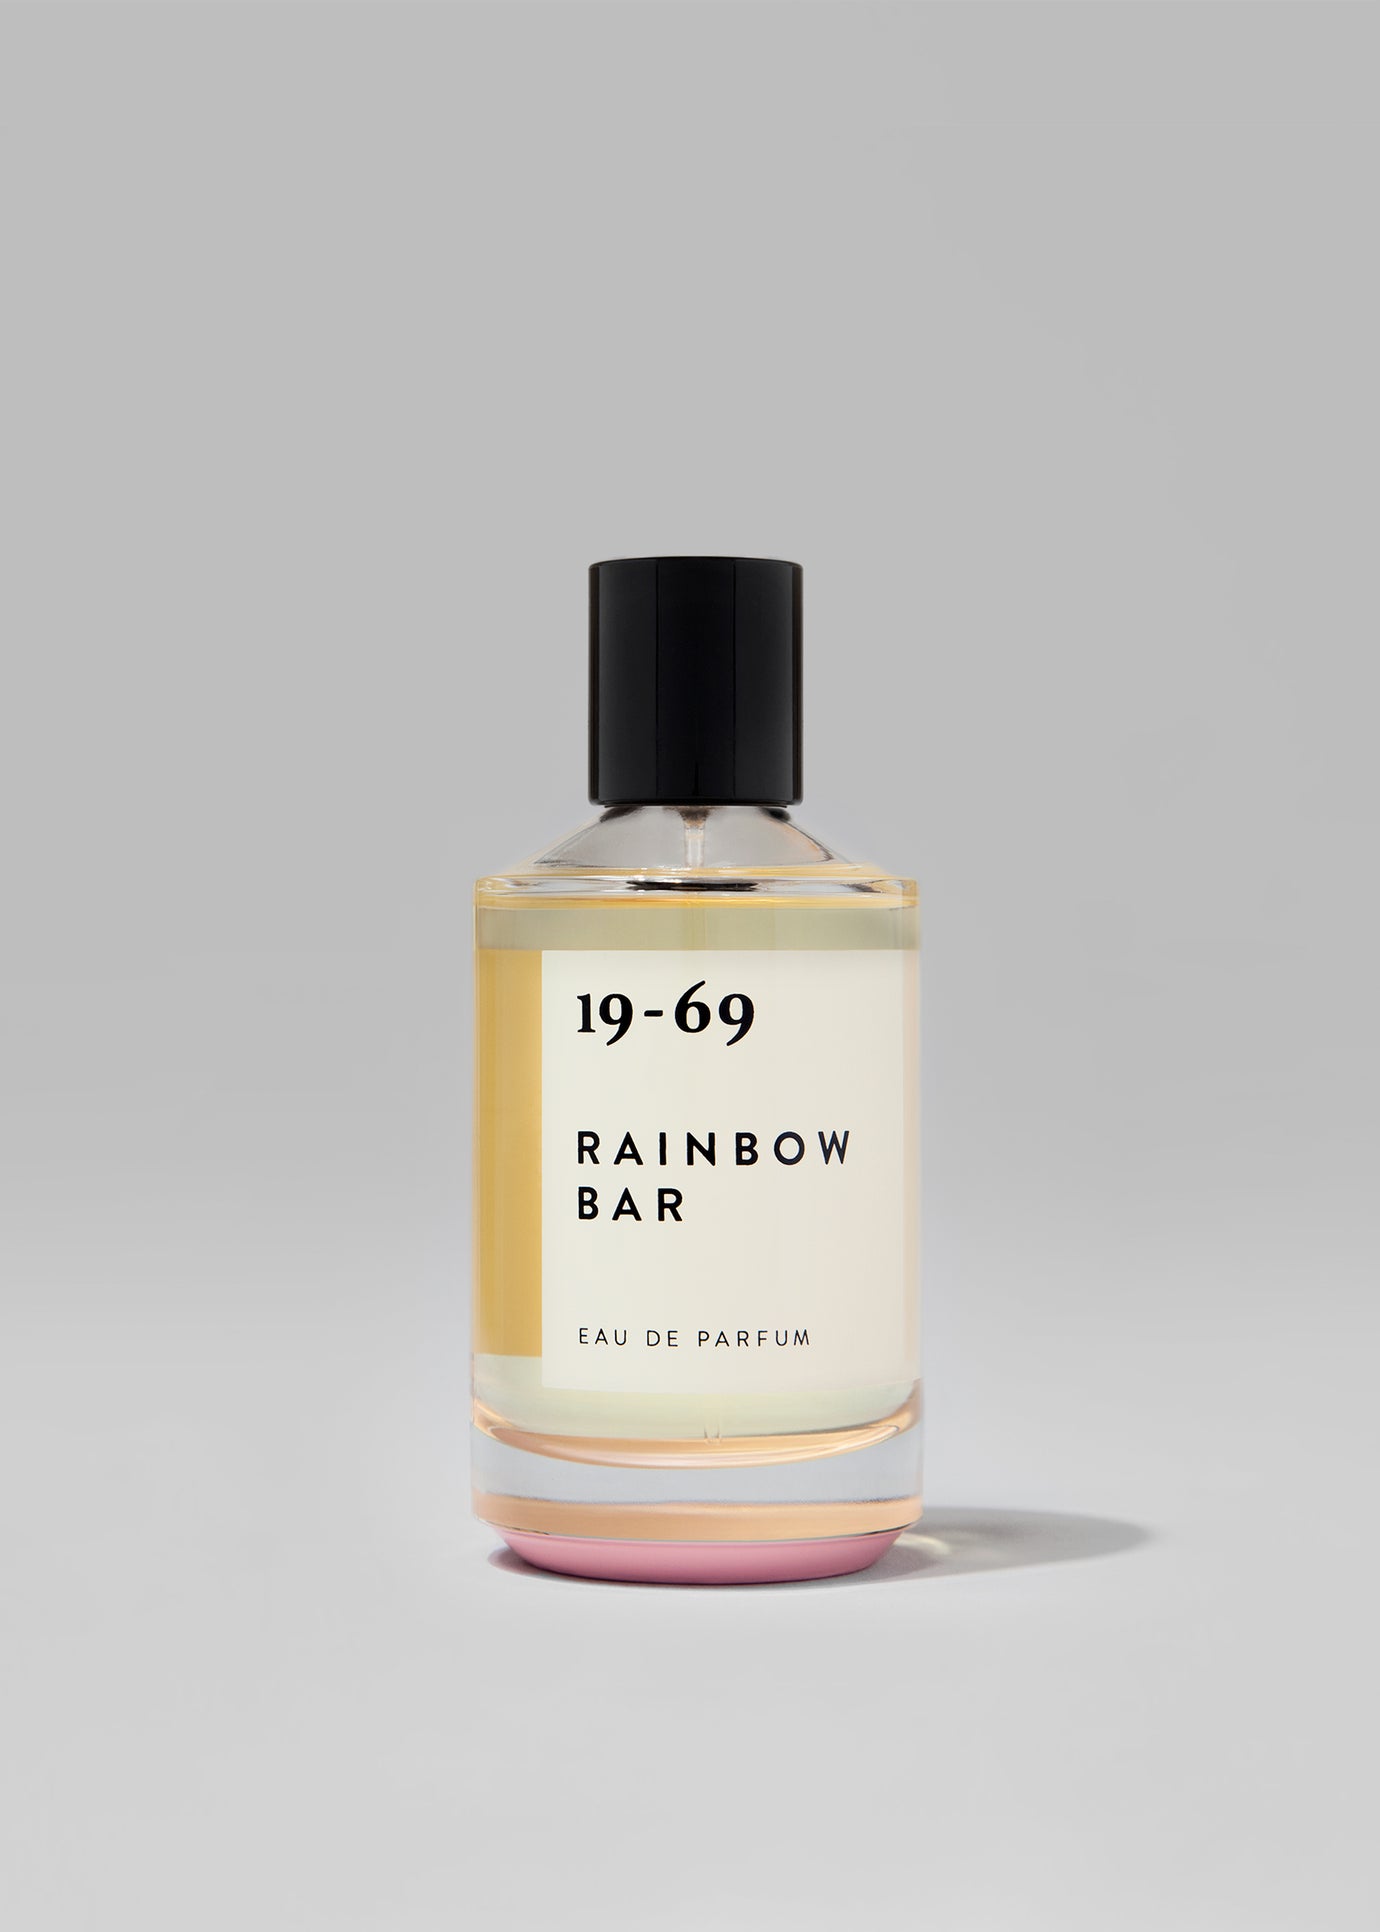 19-69 Rainbow Bar Eau de Parfum